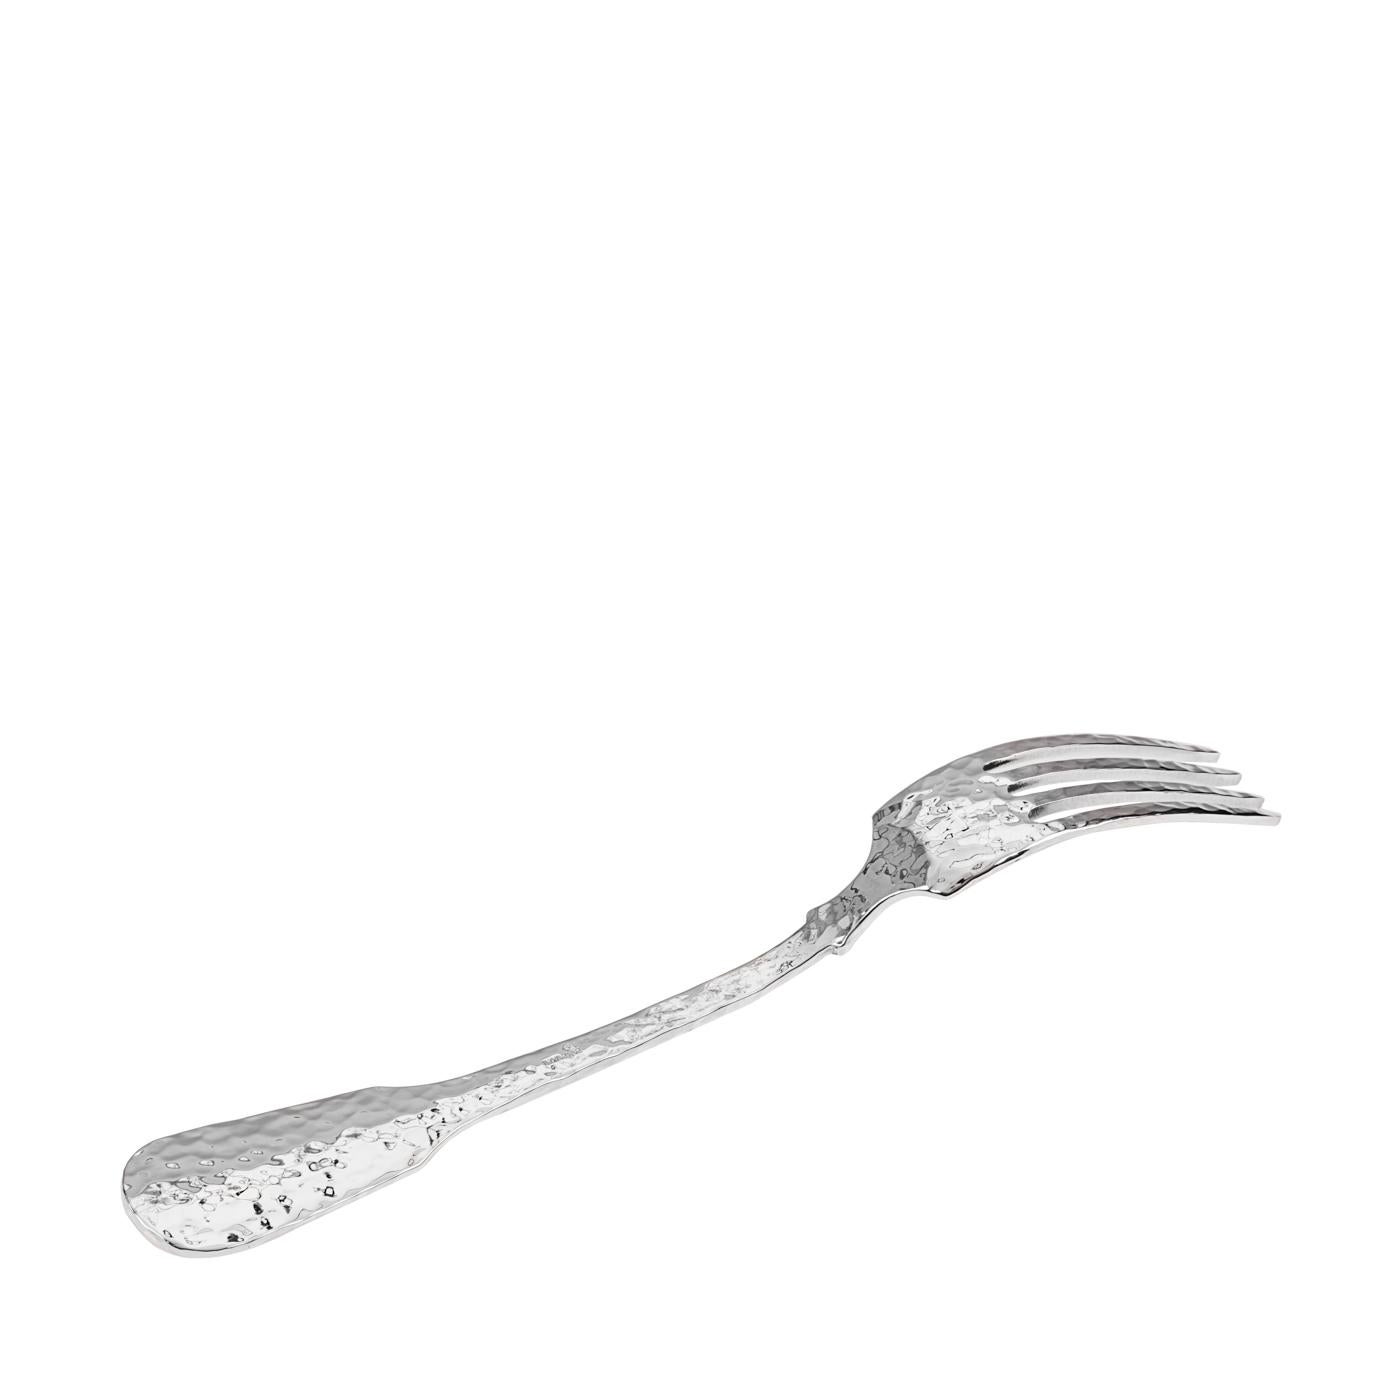 Italian Troiana Sterling Silver Fork + Knife Set for Two